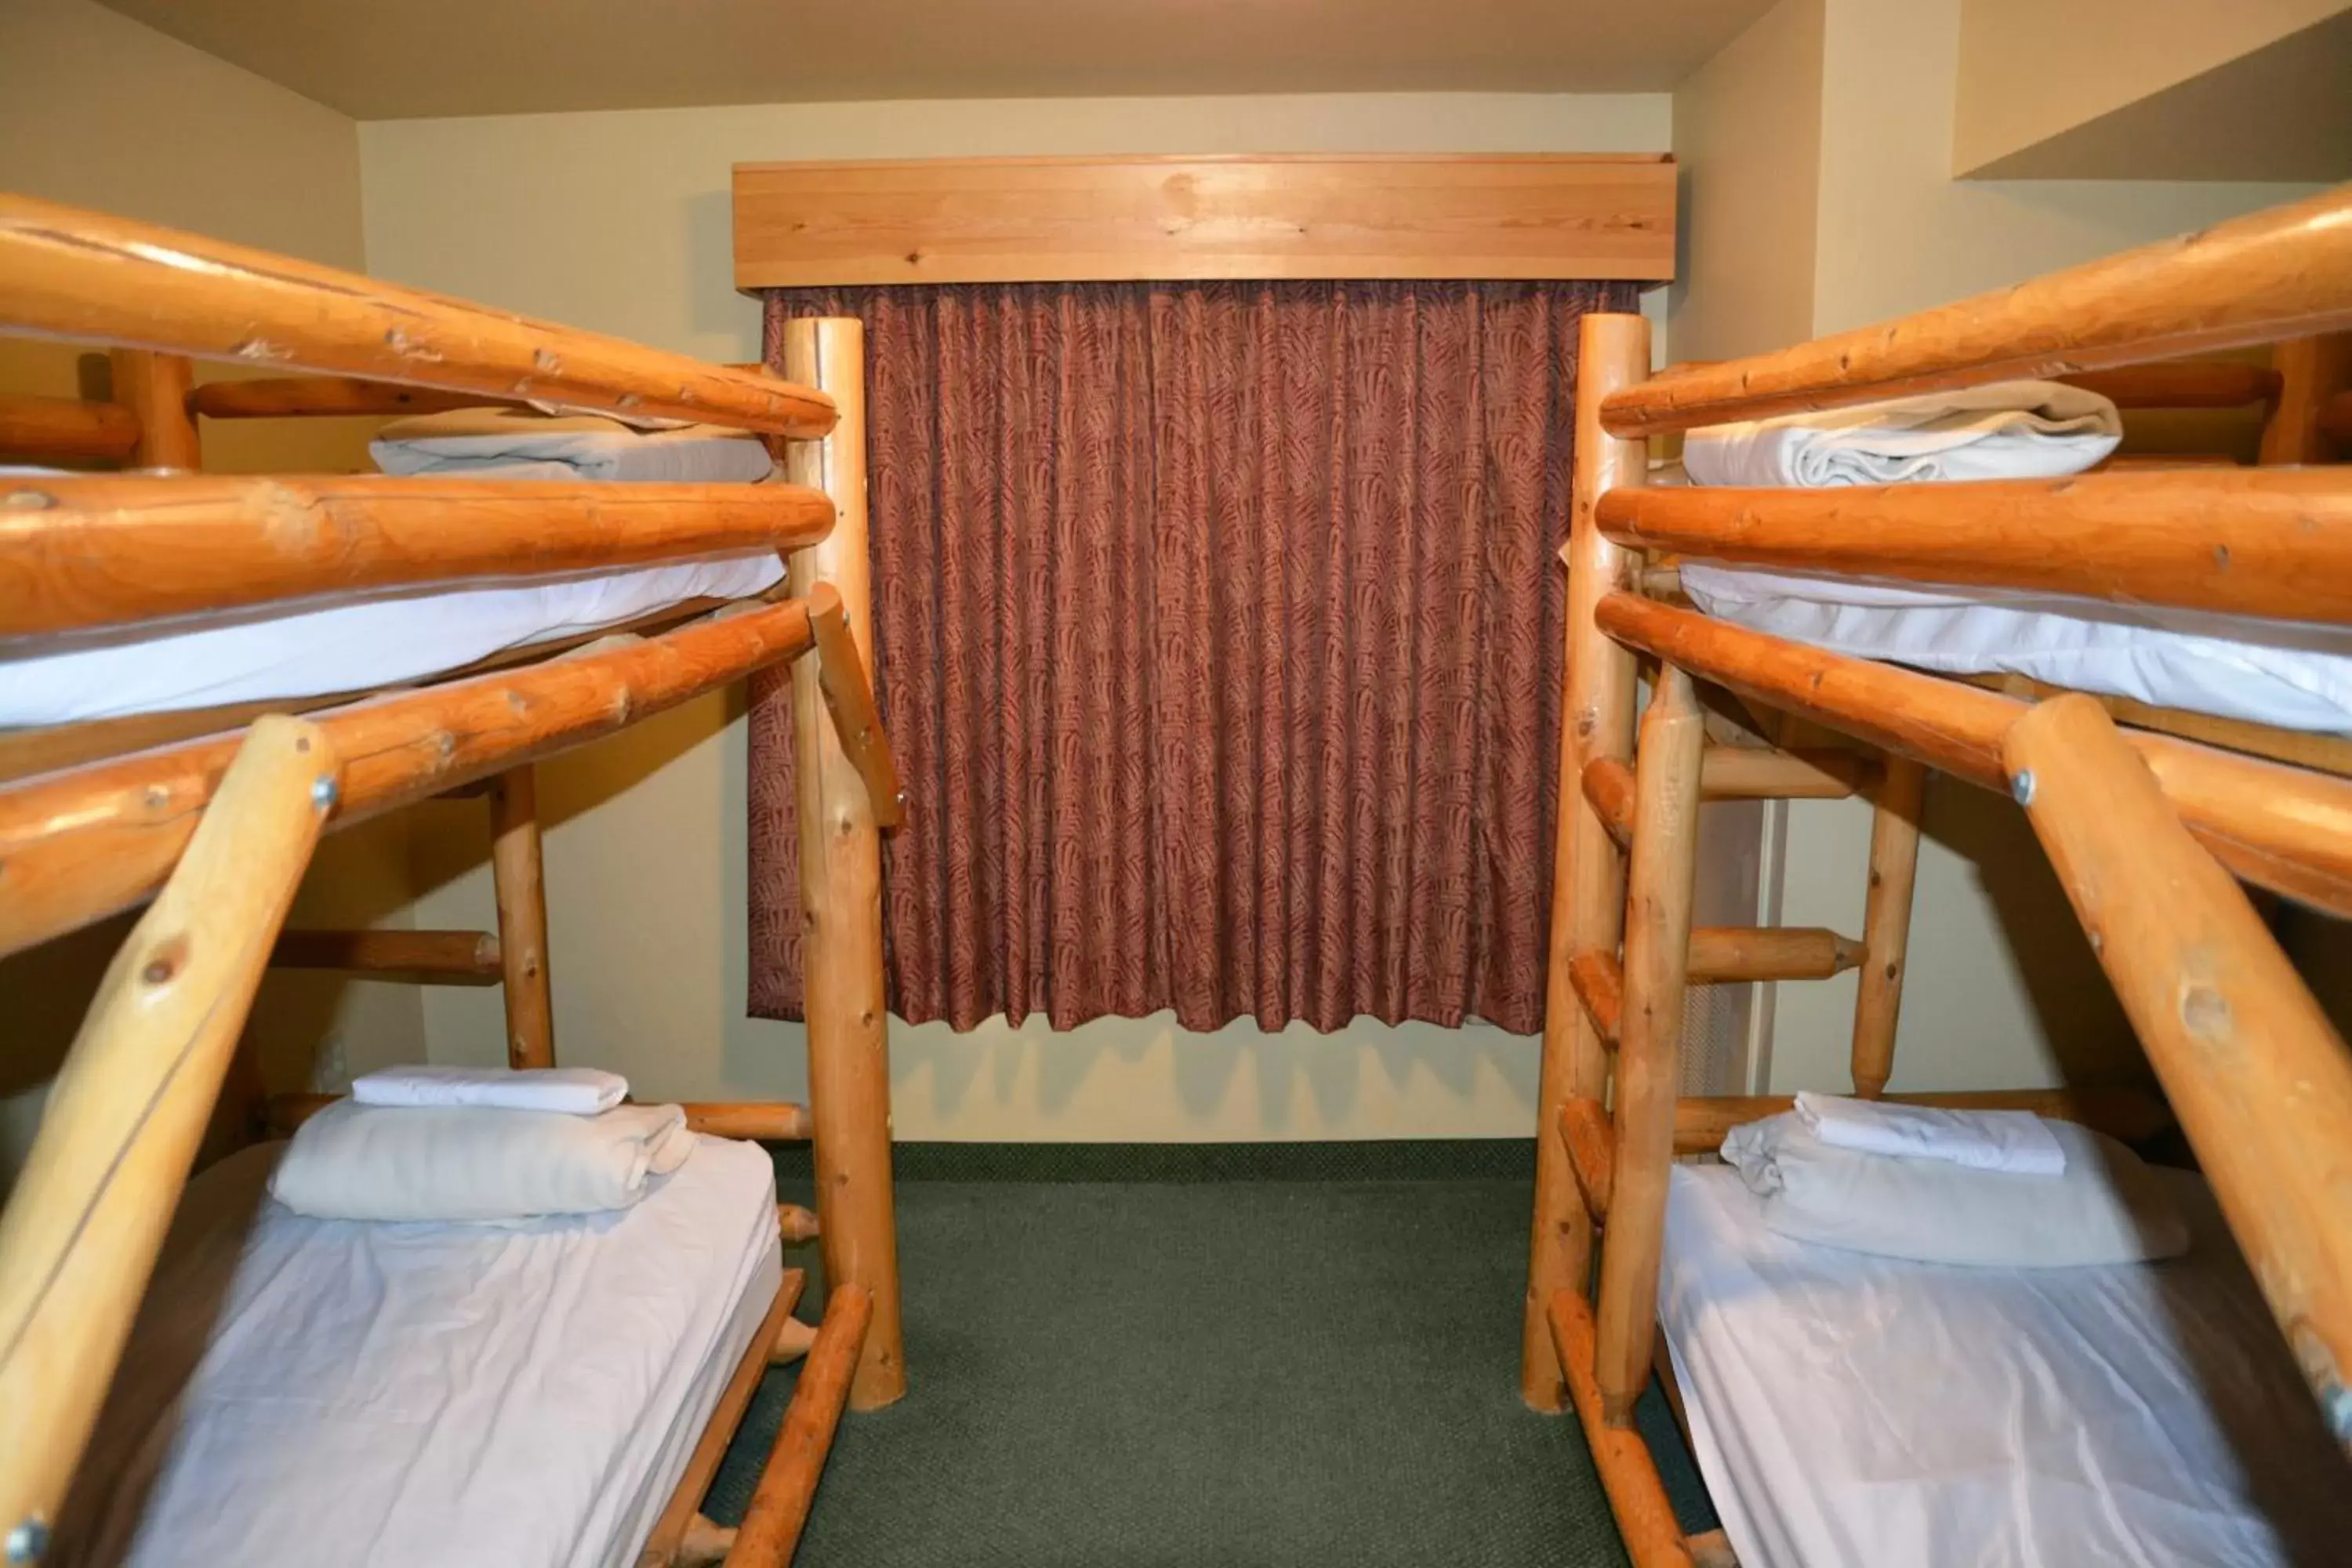 Bunk Bed in Three Bears Resort